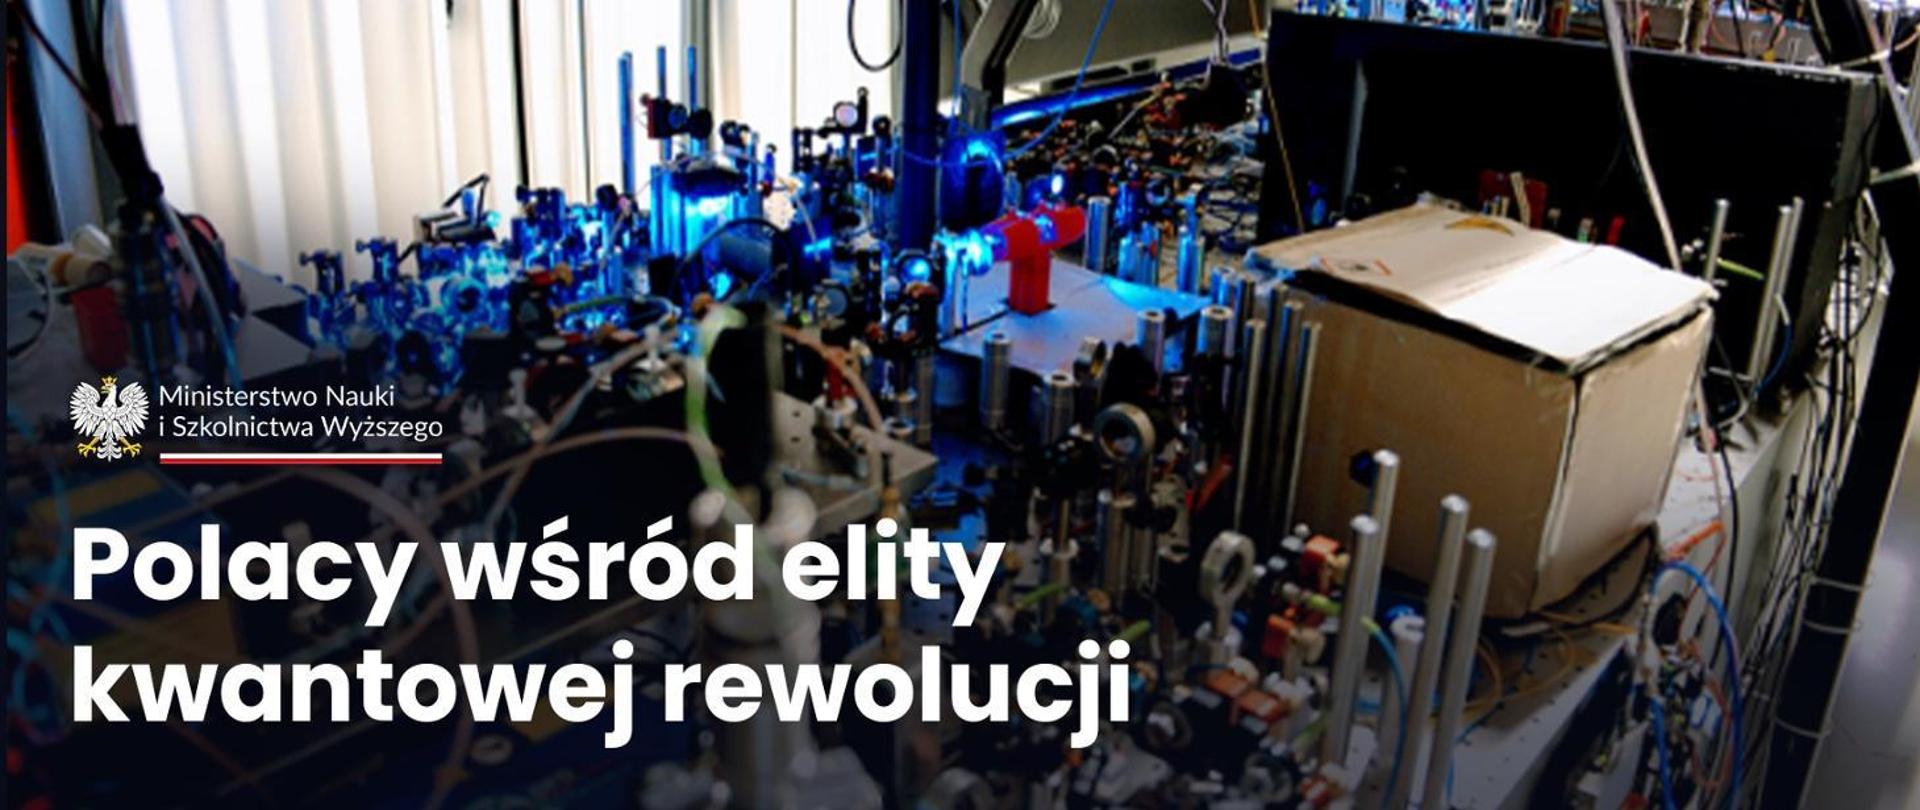 Poles among the elite of the quantum revolution